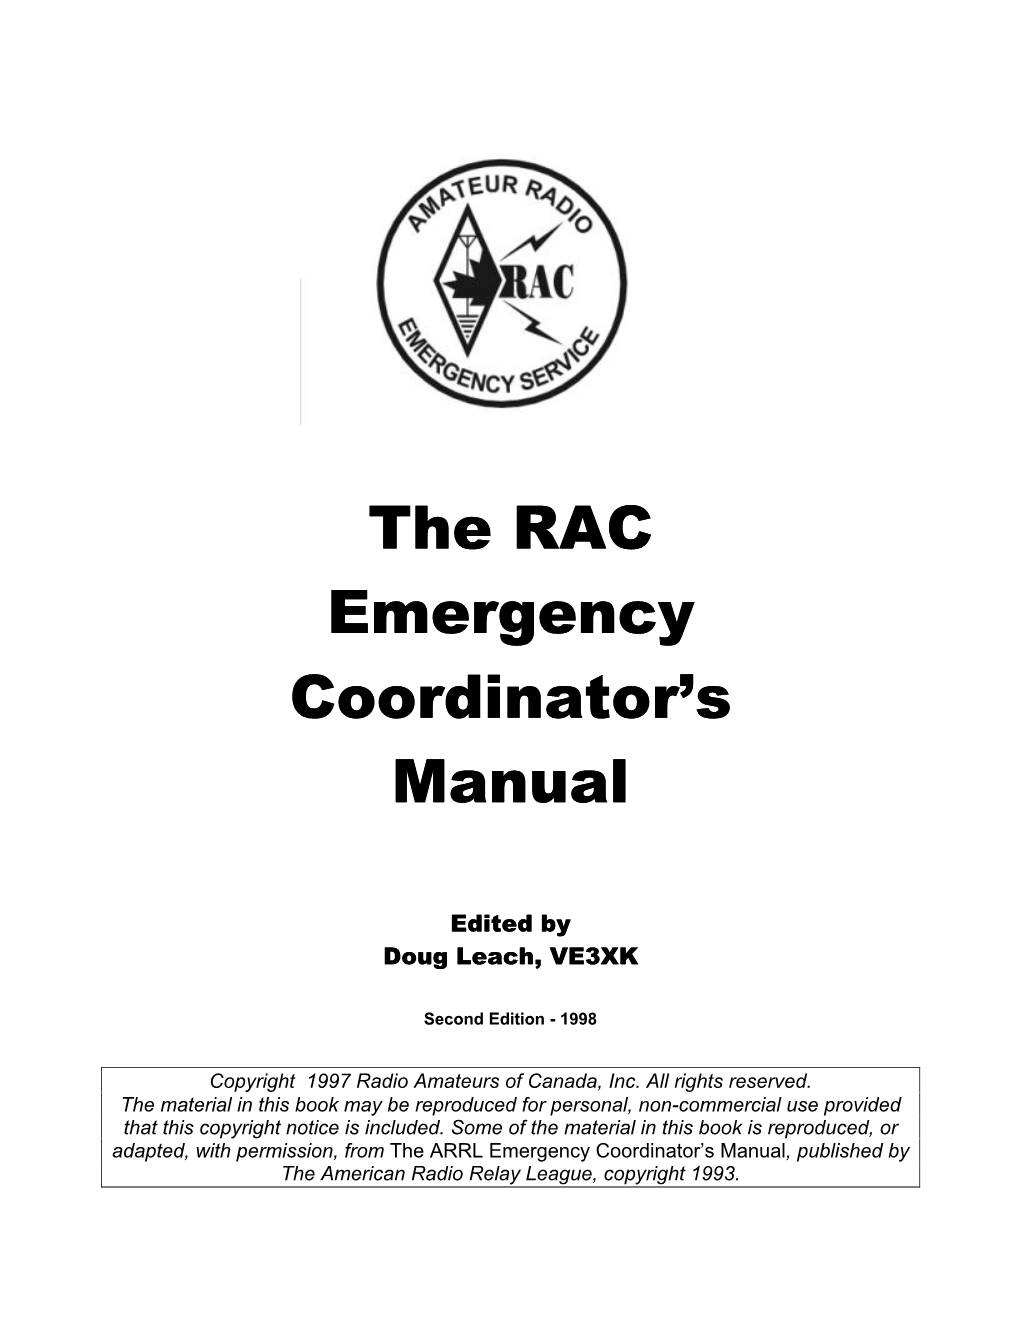 The RAC Emergency Coordinator's Manual